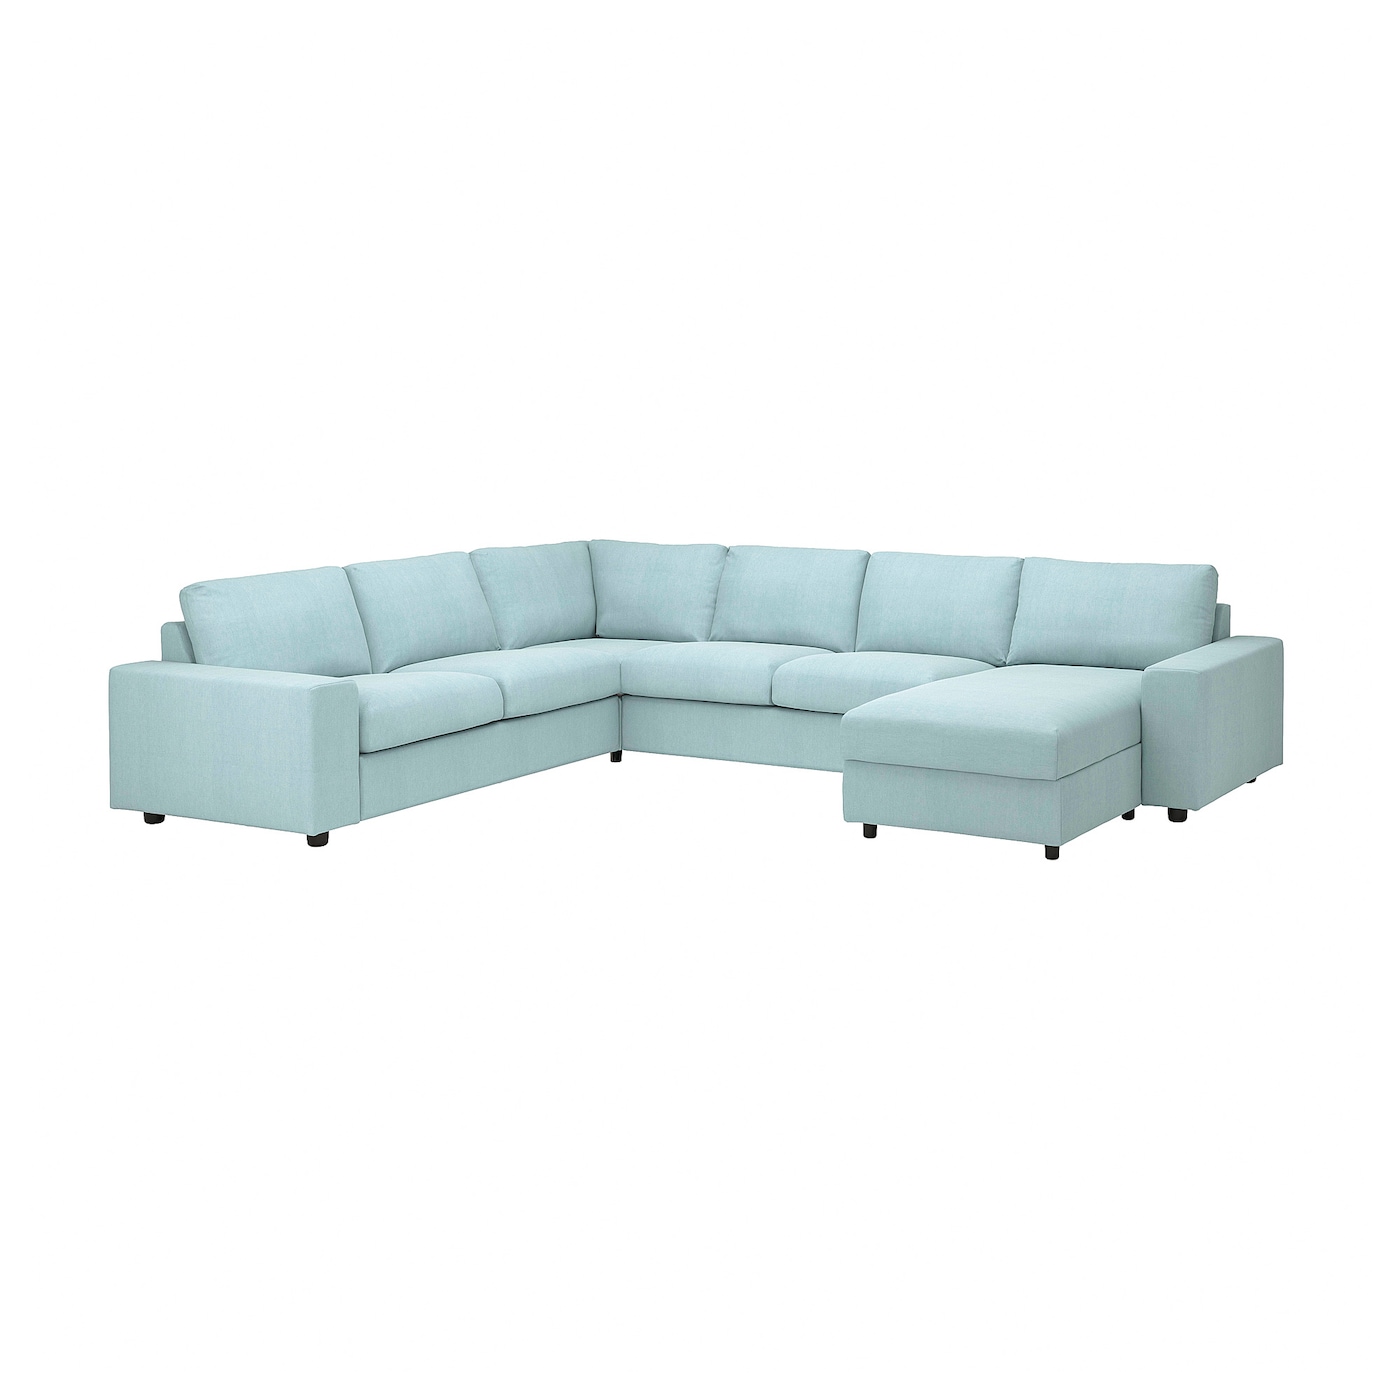 ВИМЛЕ Диван угловой, 5-местный. диван+диван, с широкими подлокотниками/Саксемара светло-синий VIMLE IKEA диван угловой диван ру ройн мини velvet smoke